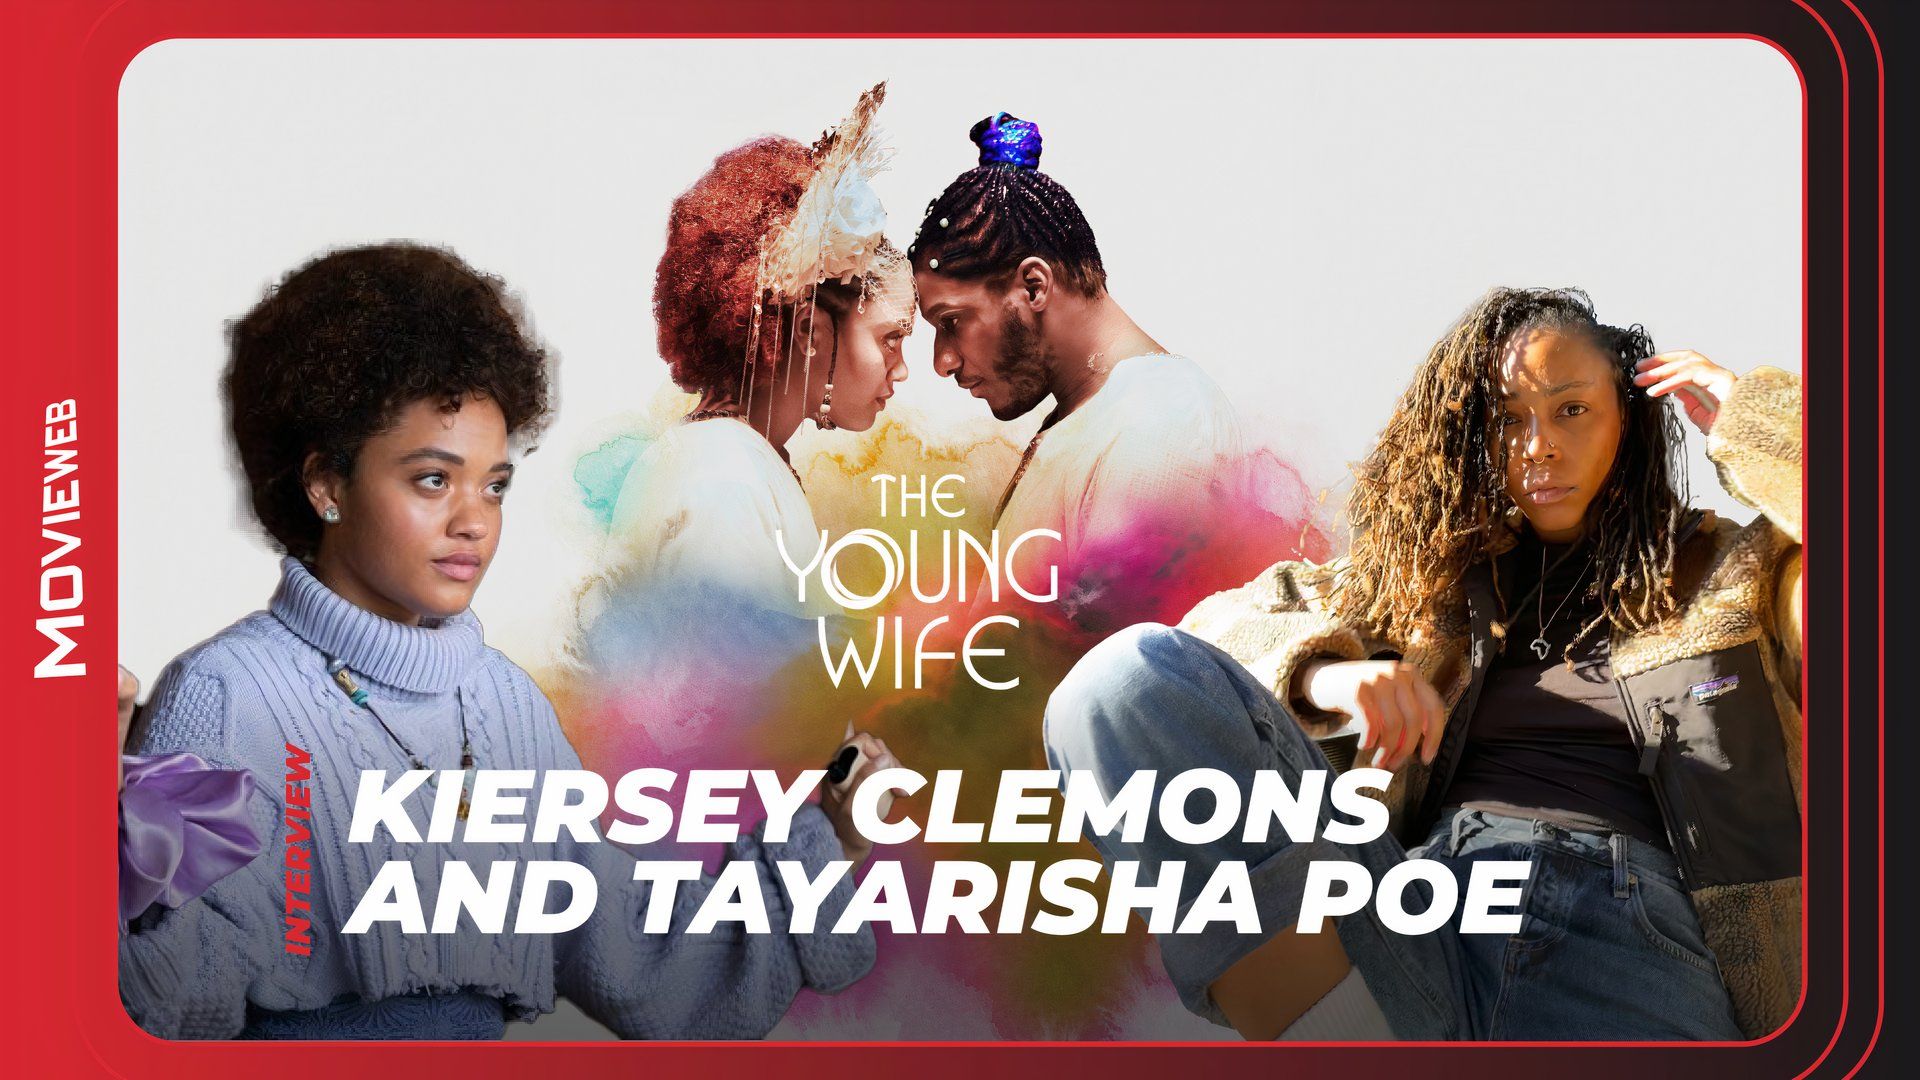 The Young Wife - Kiersey Clemons and Tayarisha Poe Interview